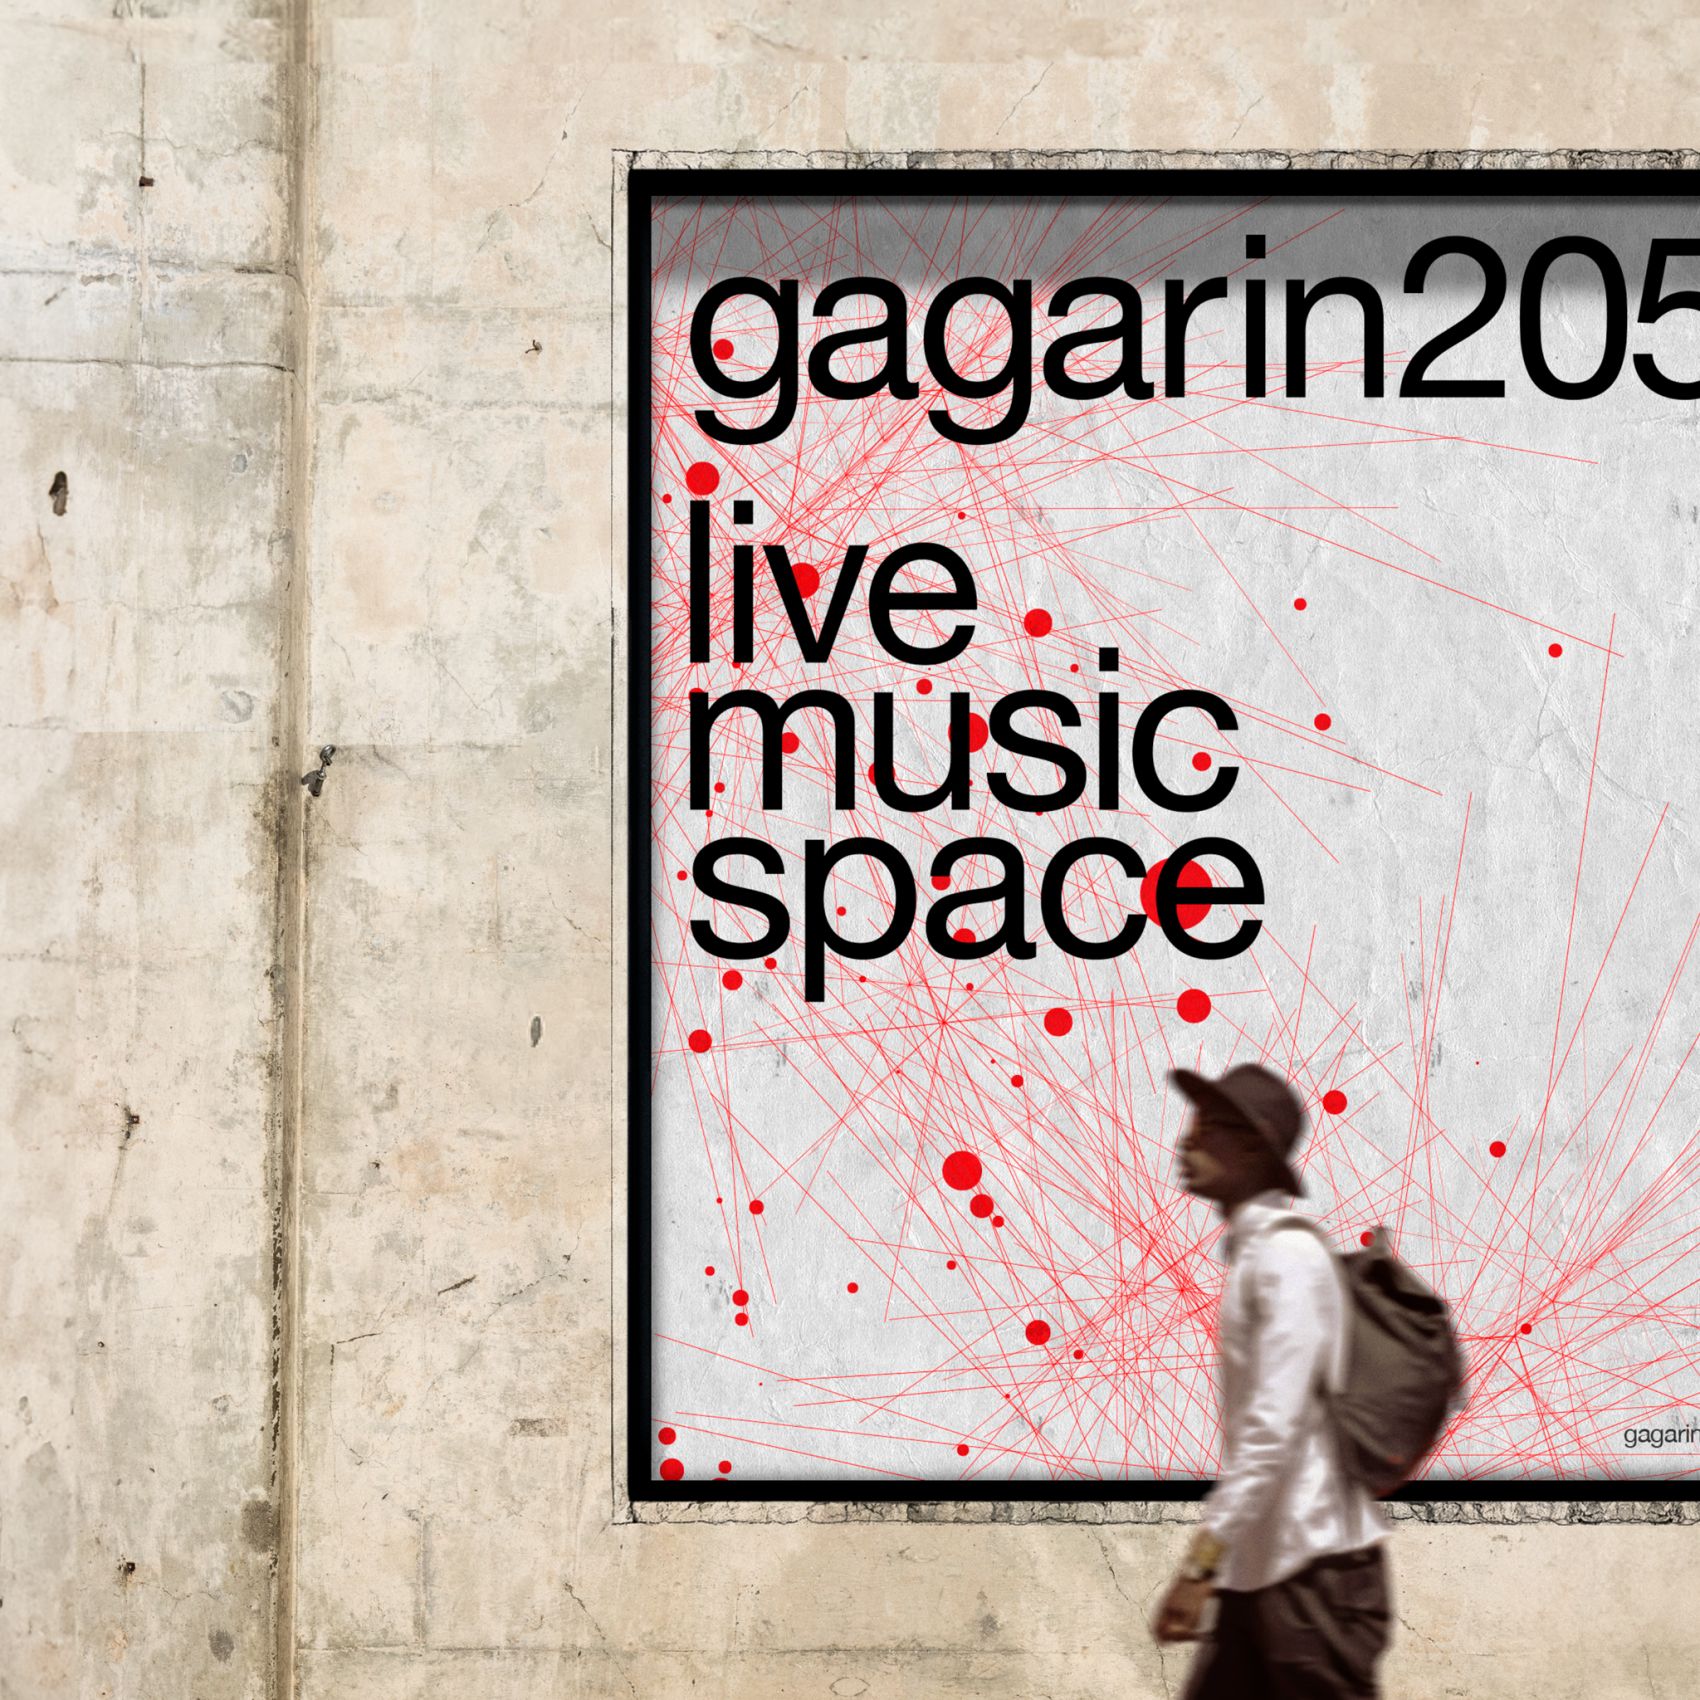 gagarin-205-live-music-space